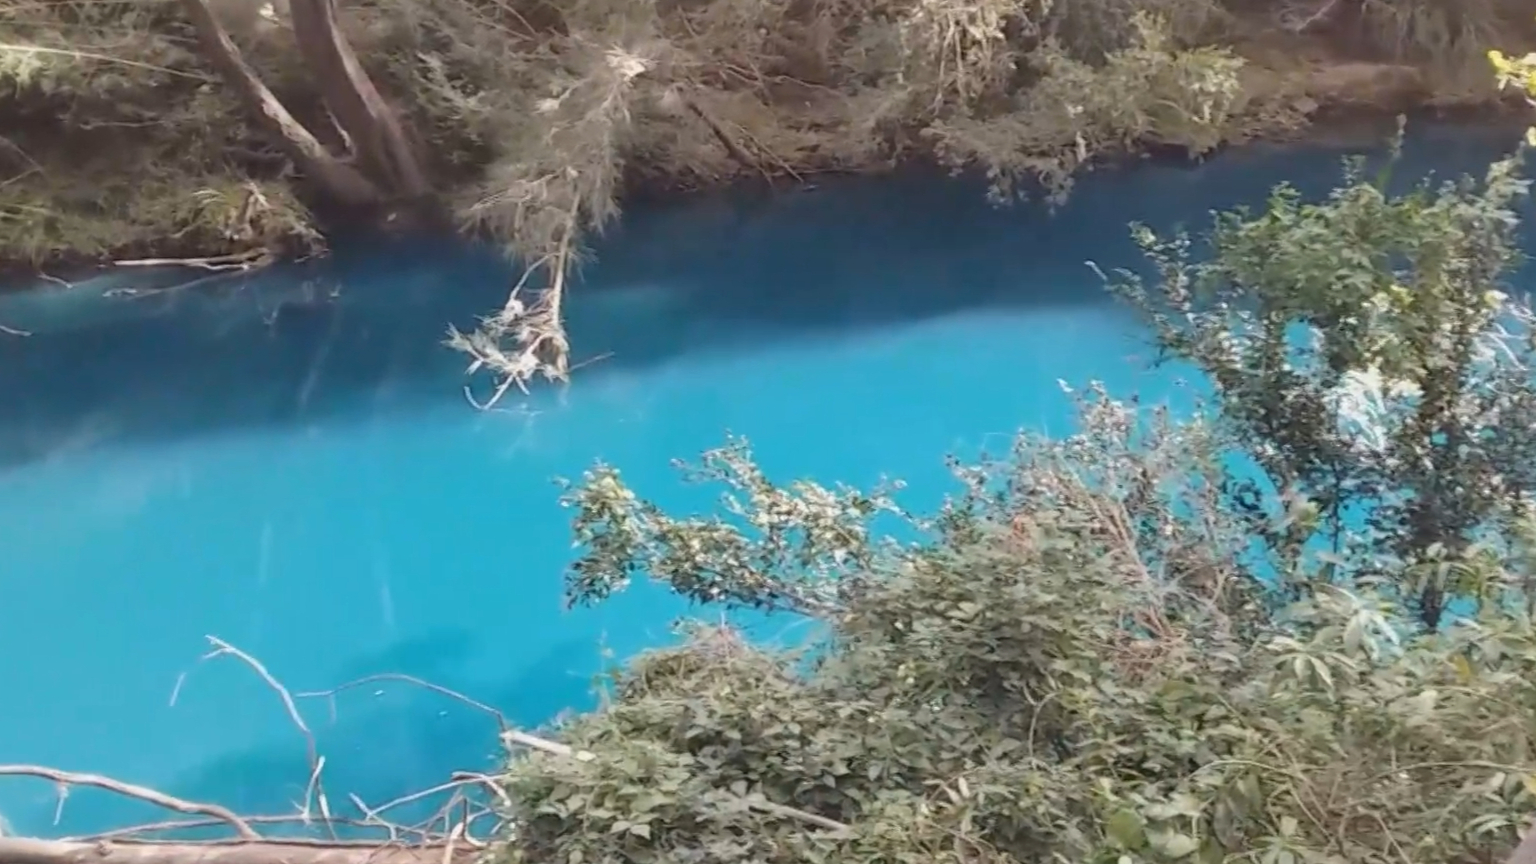 Concern as Toongabbie creek turns bright blue